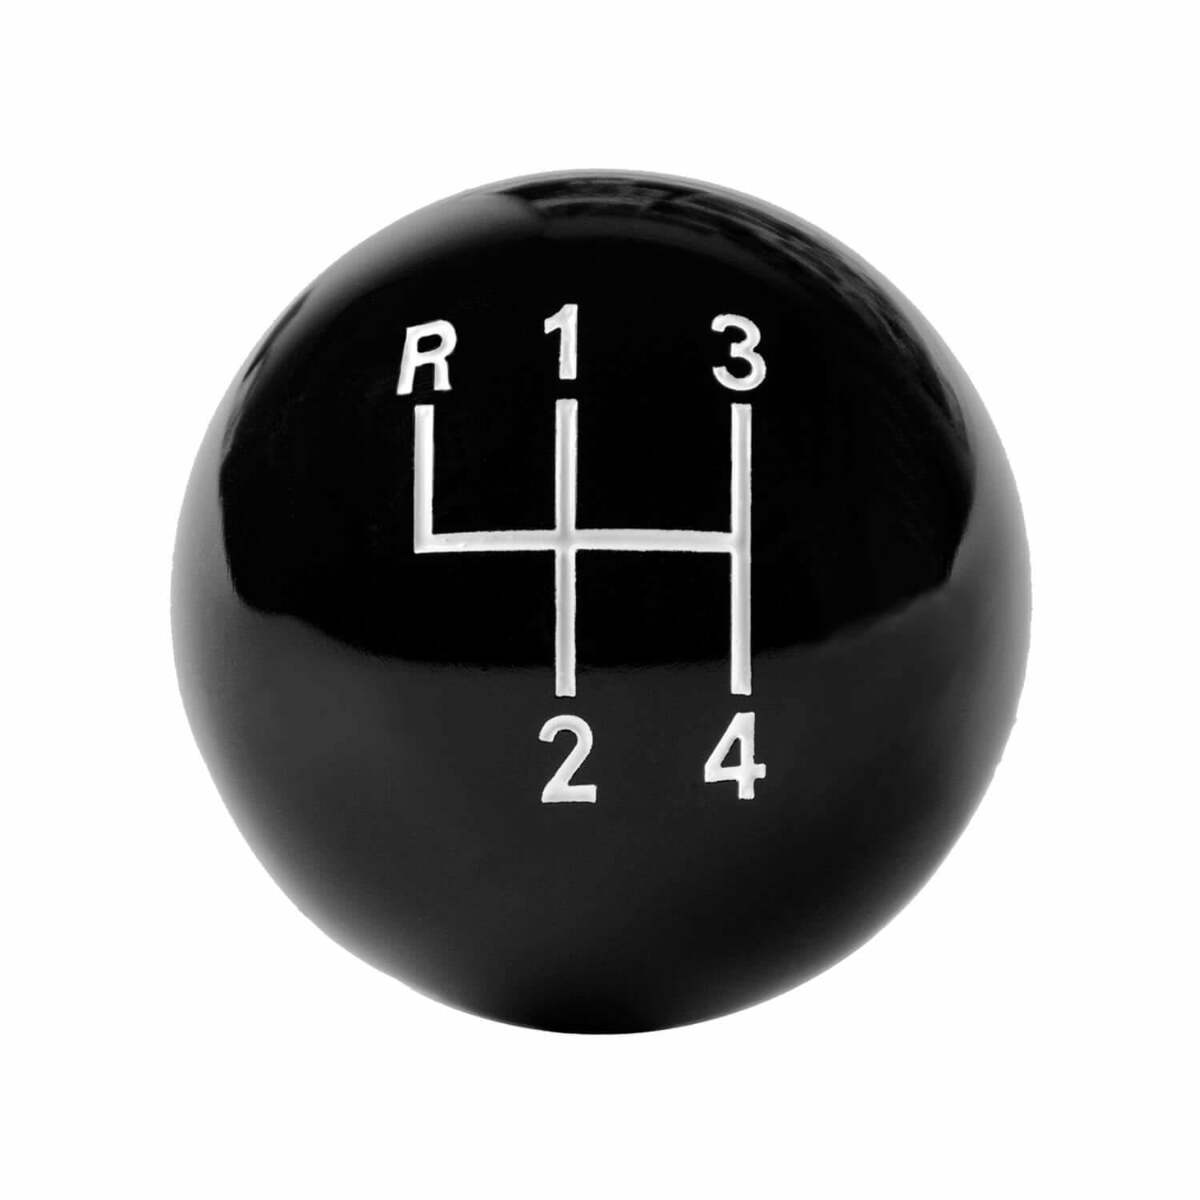 Hurst Shift Knob - Black 4-speed 3/8-16 Threads - 1637627